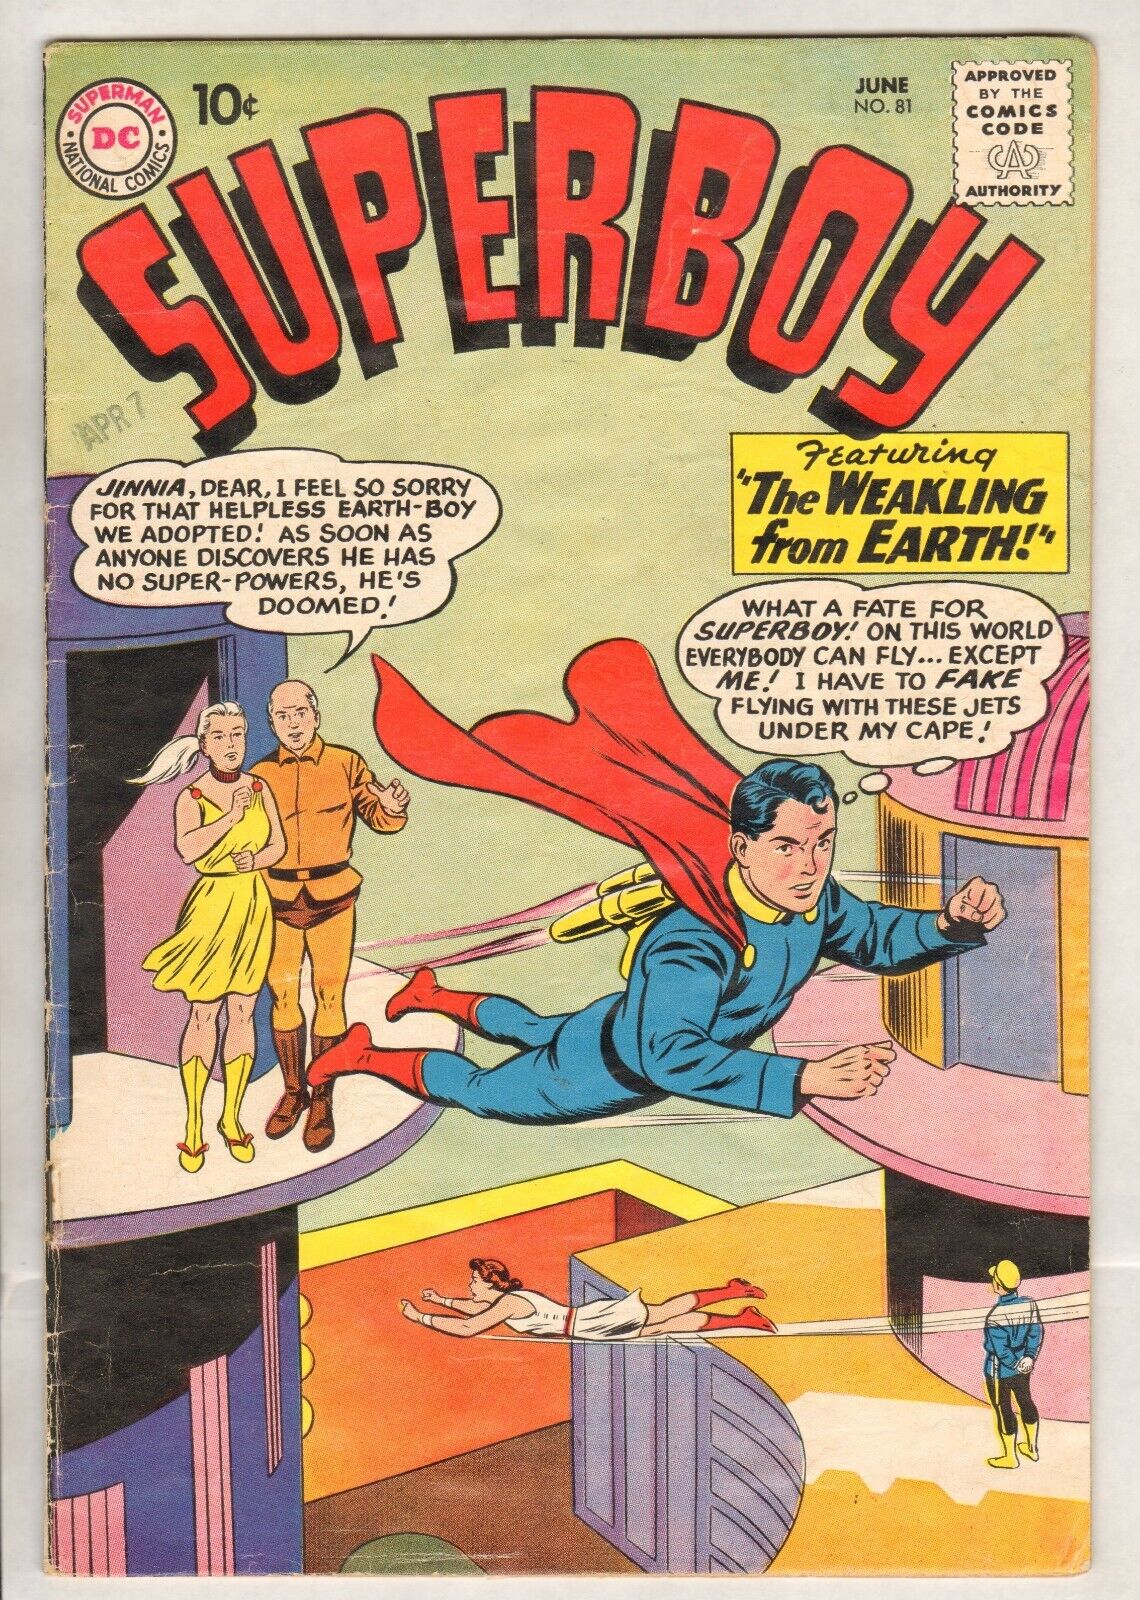 Superboy #81 (VG+) (1960, DC) [b] Curt Swan Cover